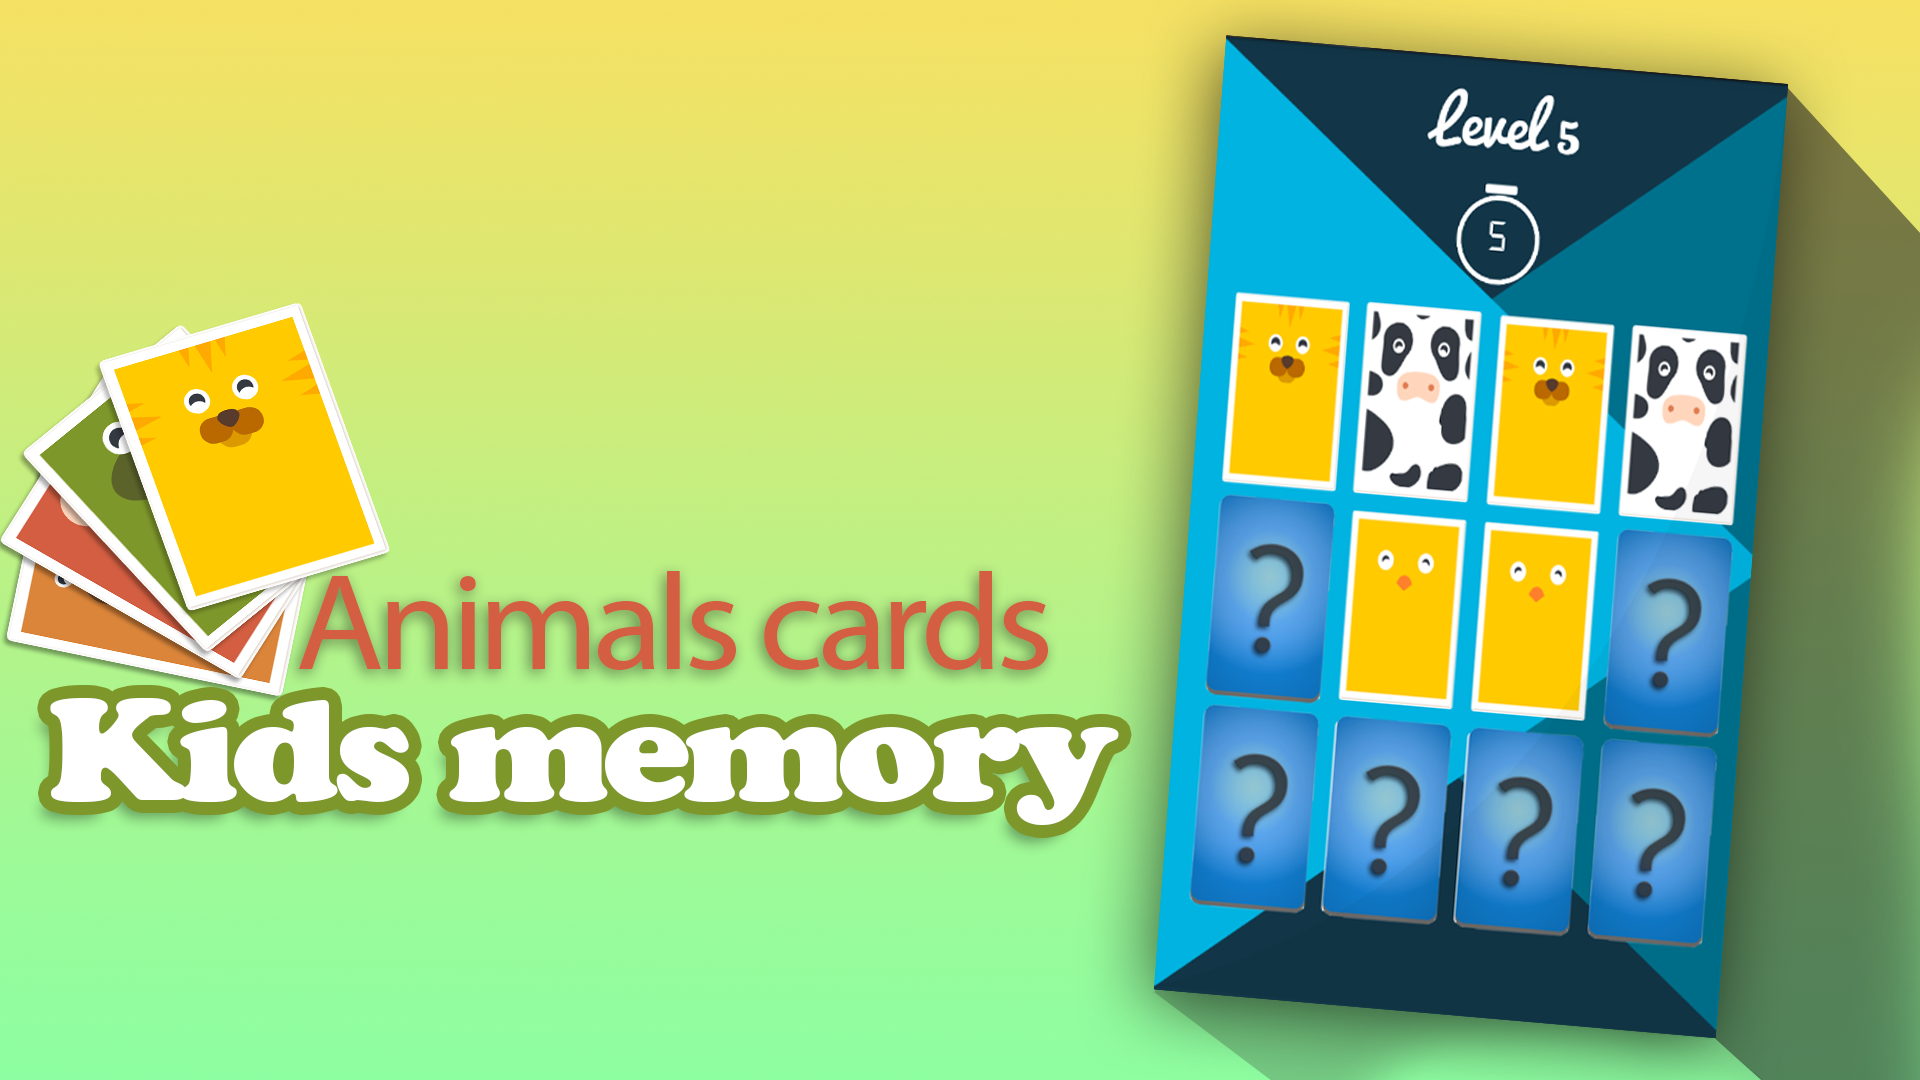 Kids memory: Animals cards